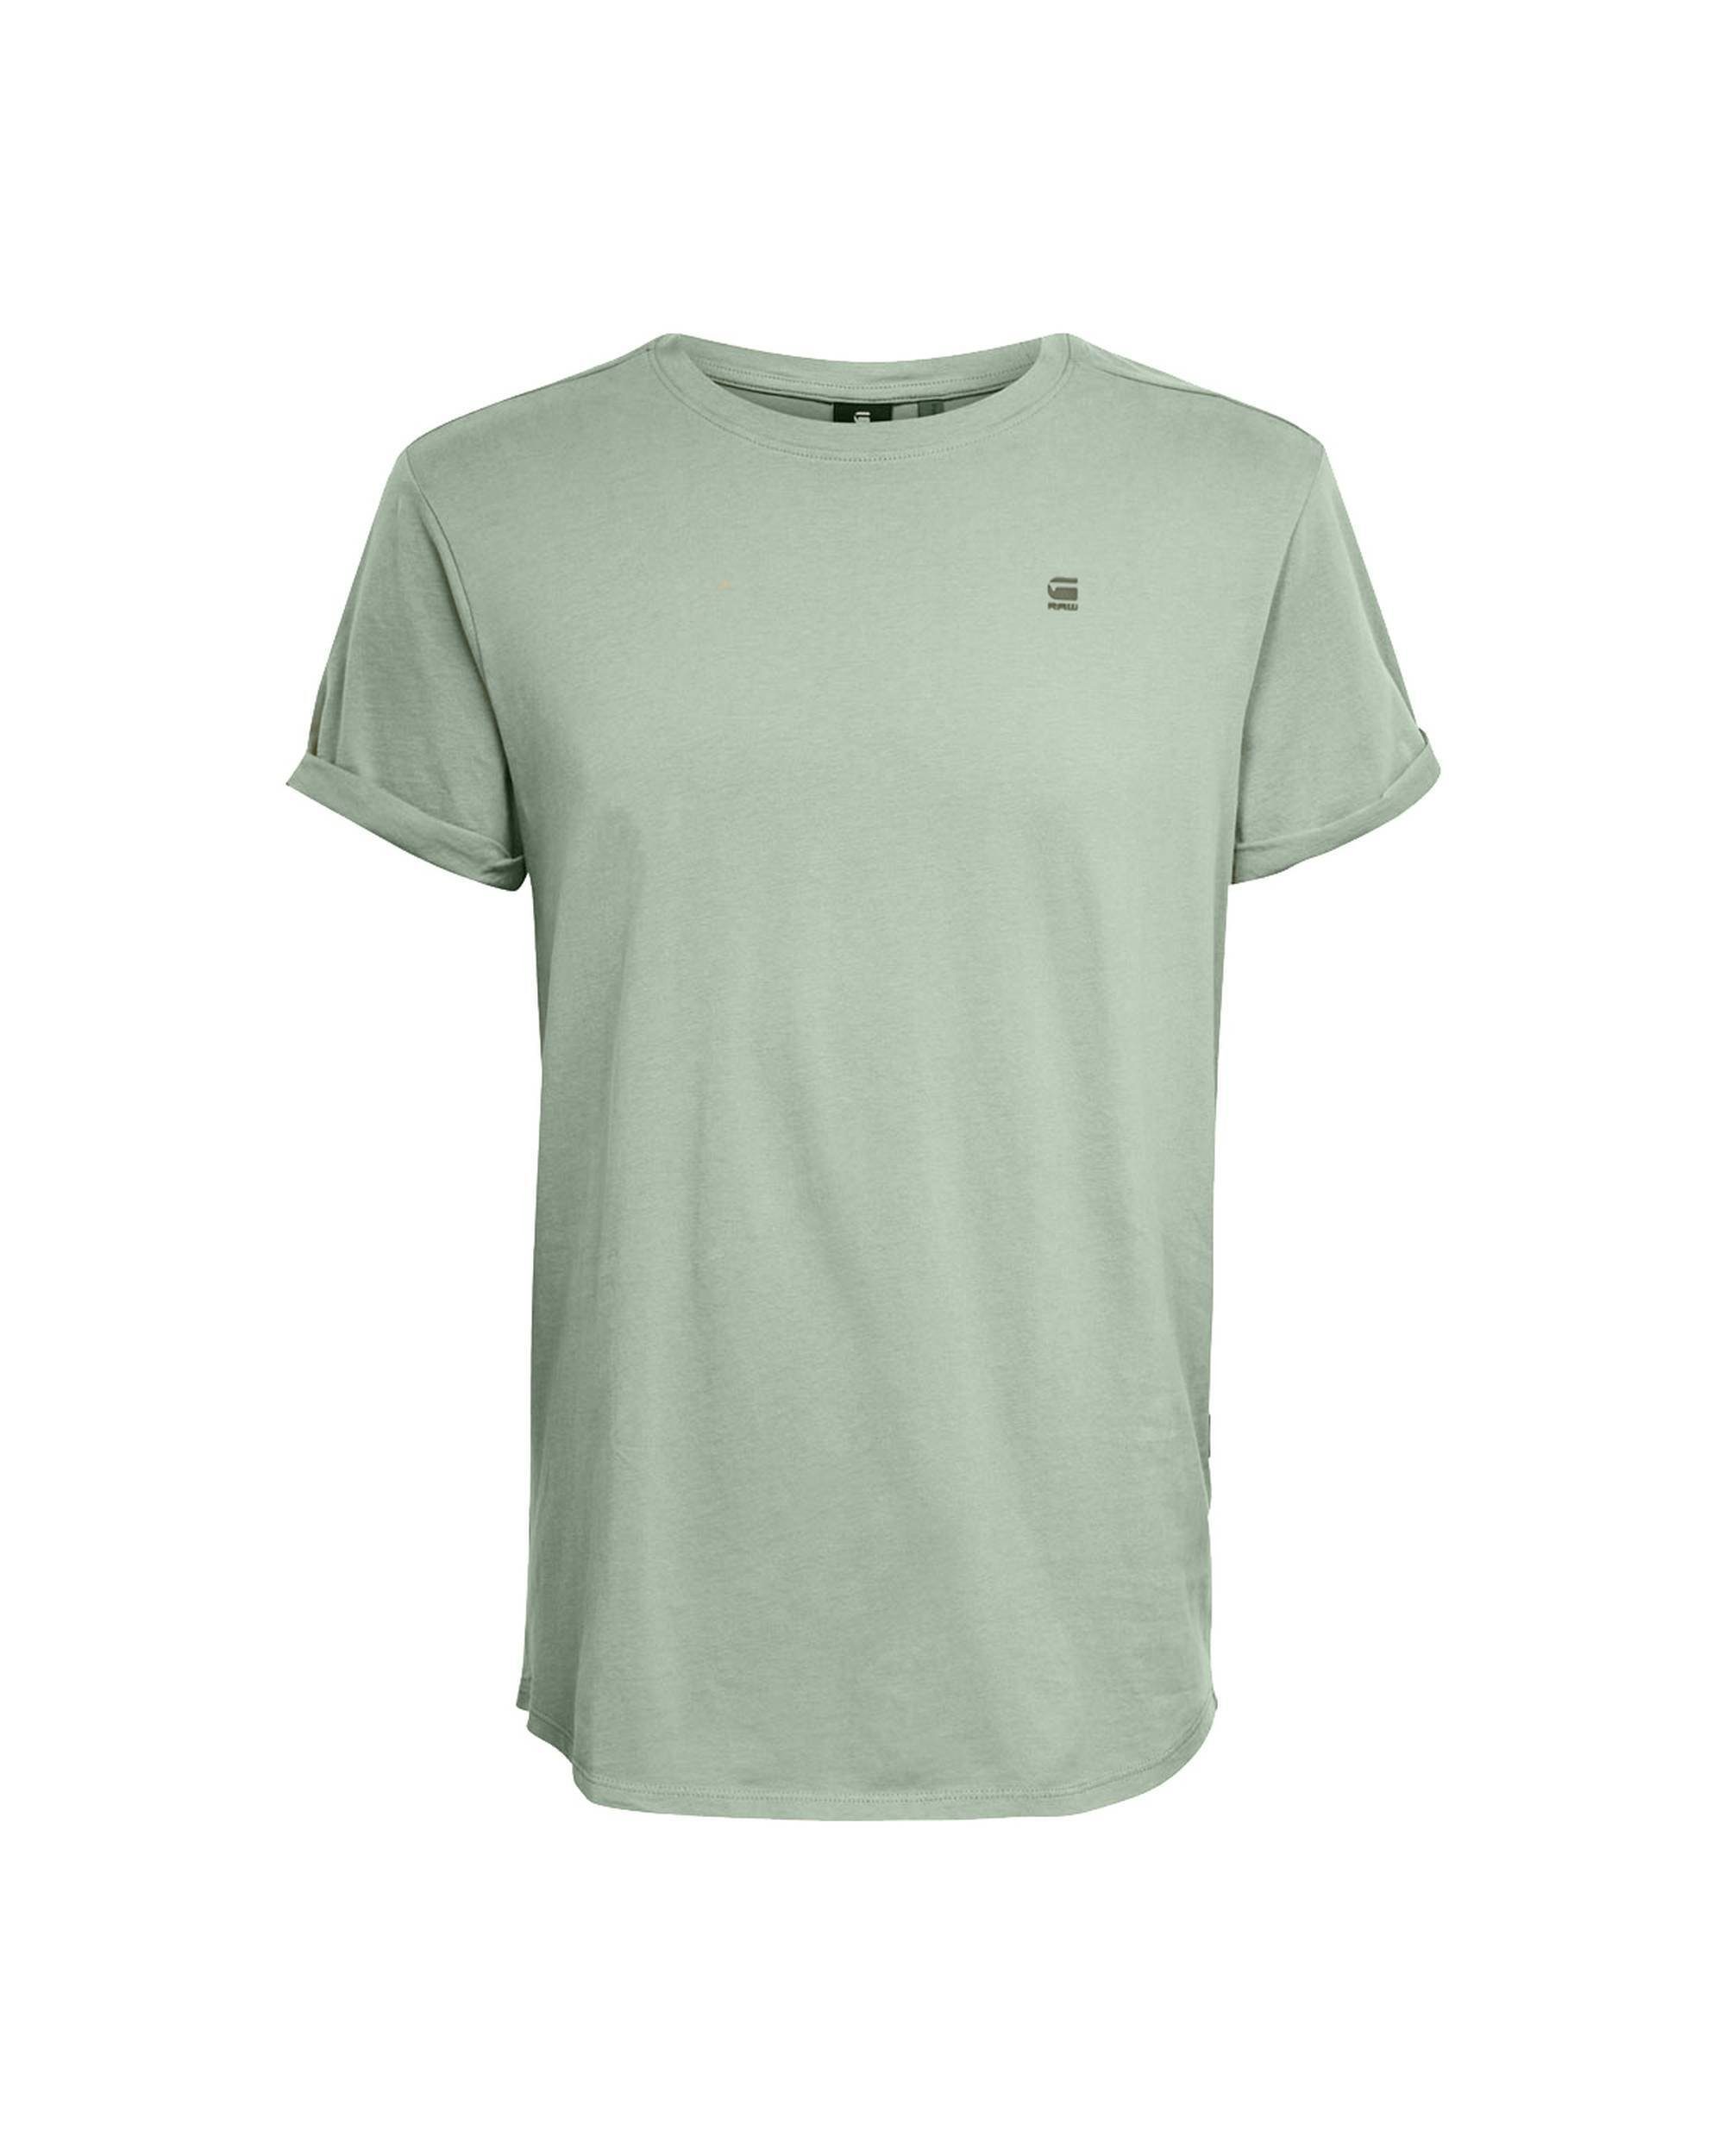 G-Star RAW T-Shirt Herren Mintgrün Rundhals, T-Shirt Lash, Organic - Cotton